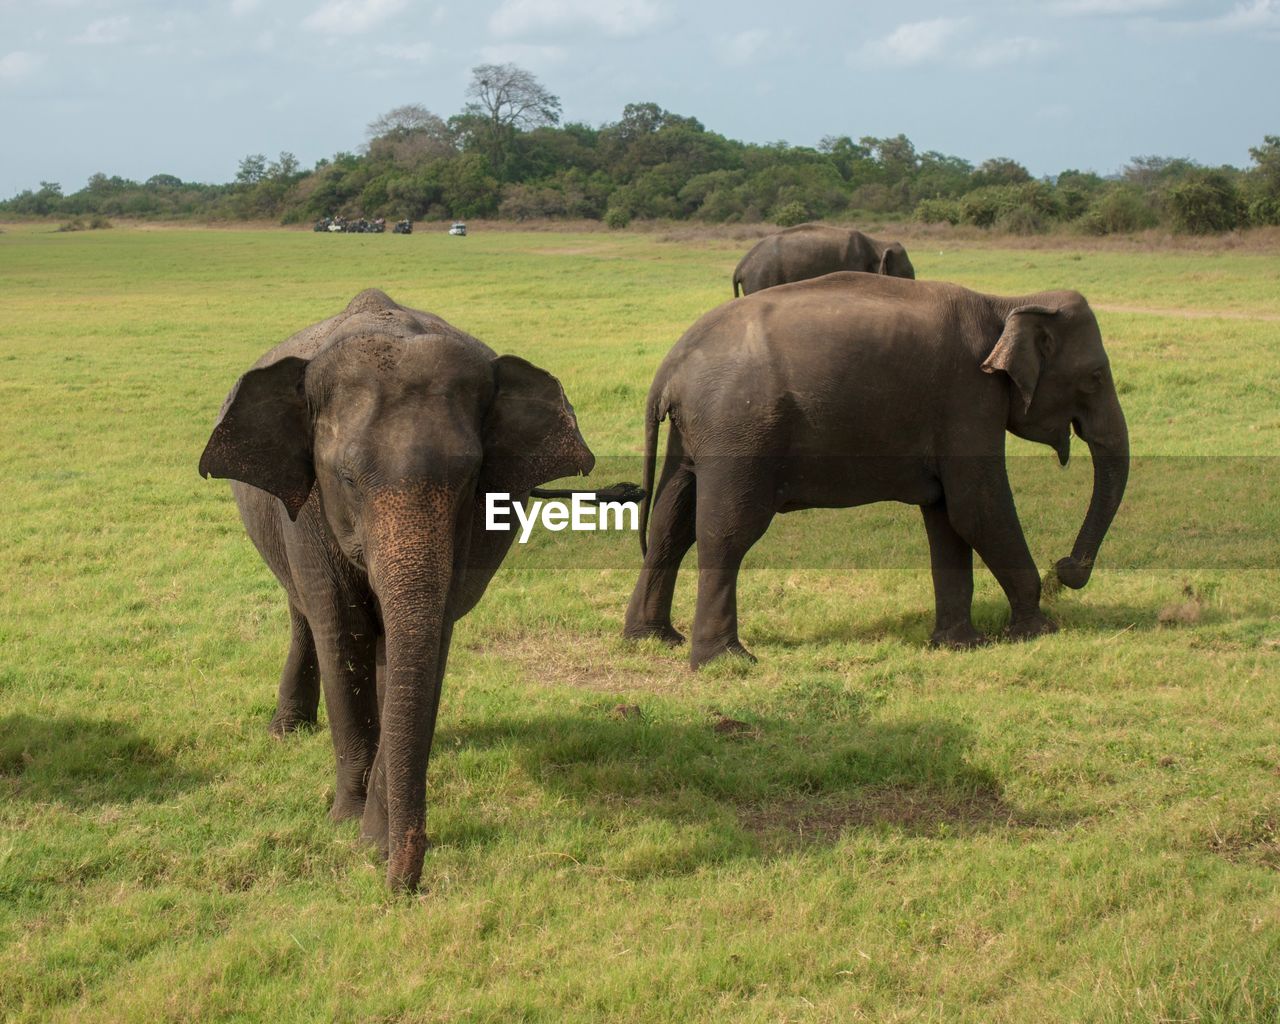 Elephants in minneriya national park, sri lanka